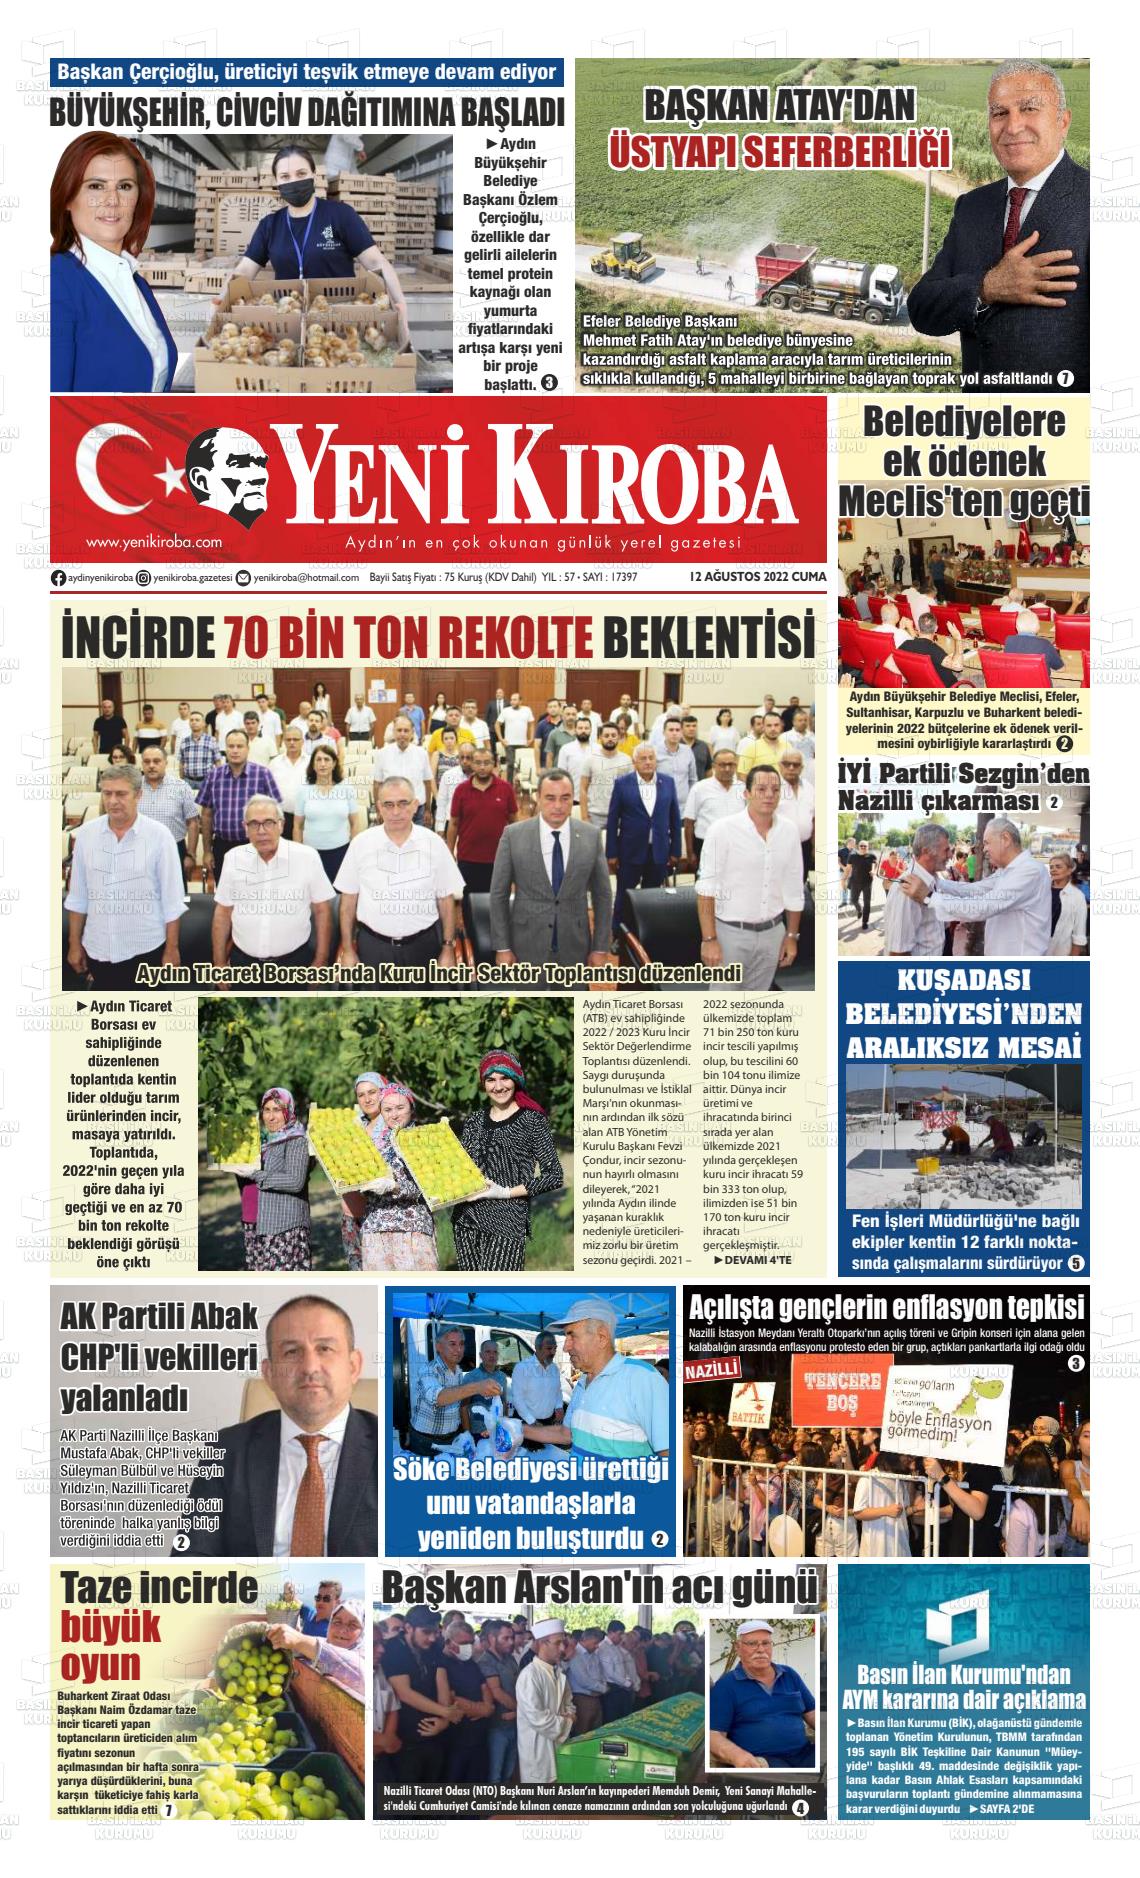 12 Ağustos 2022 Yeni Kıroba Gazete Manşeti